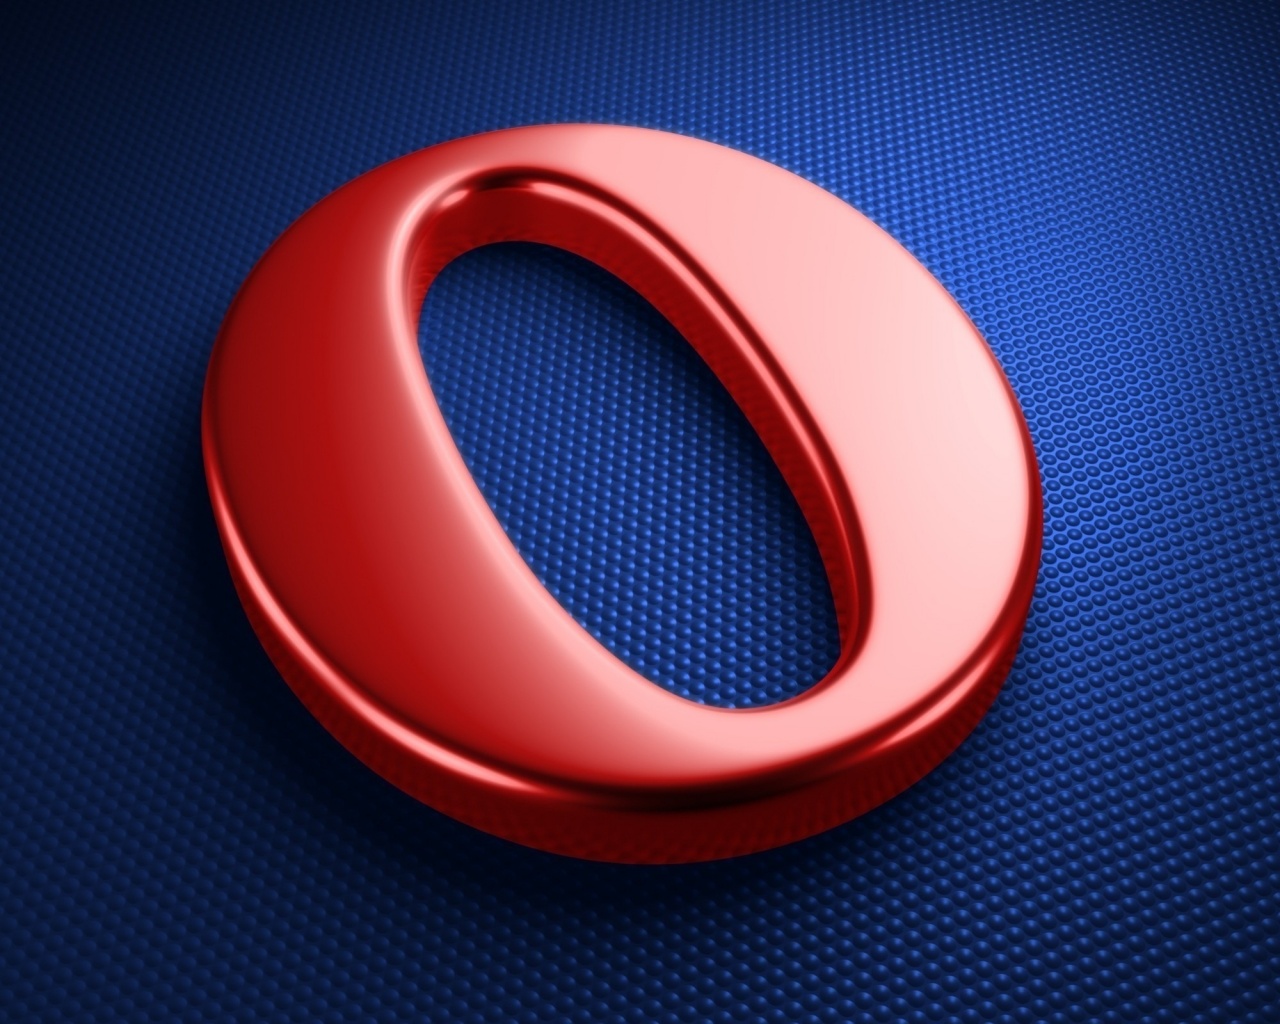 Opera Browser